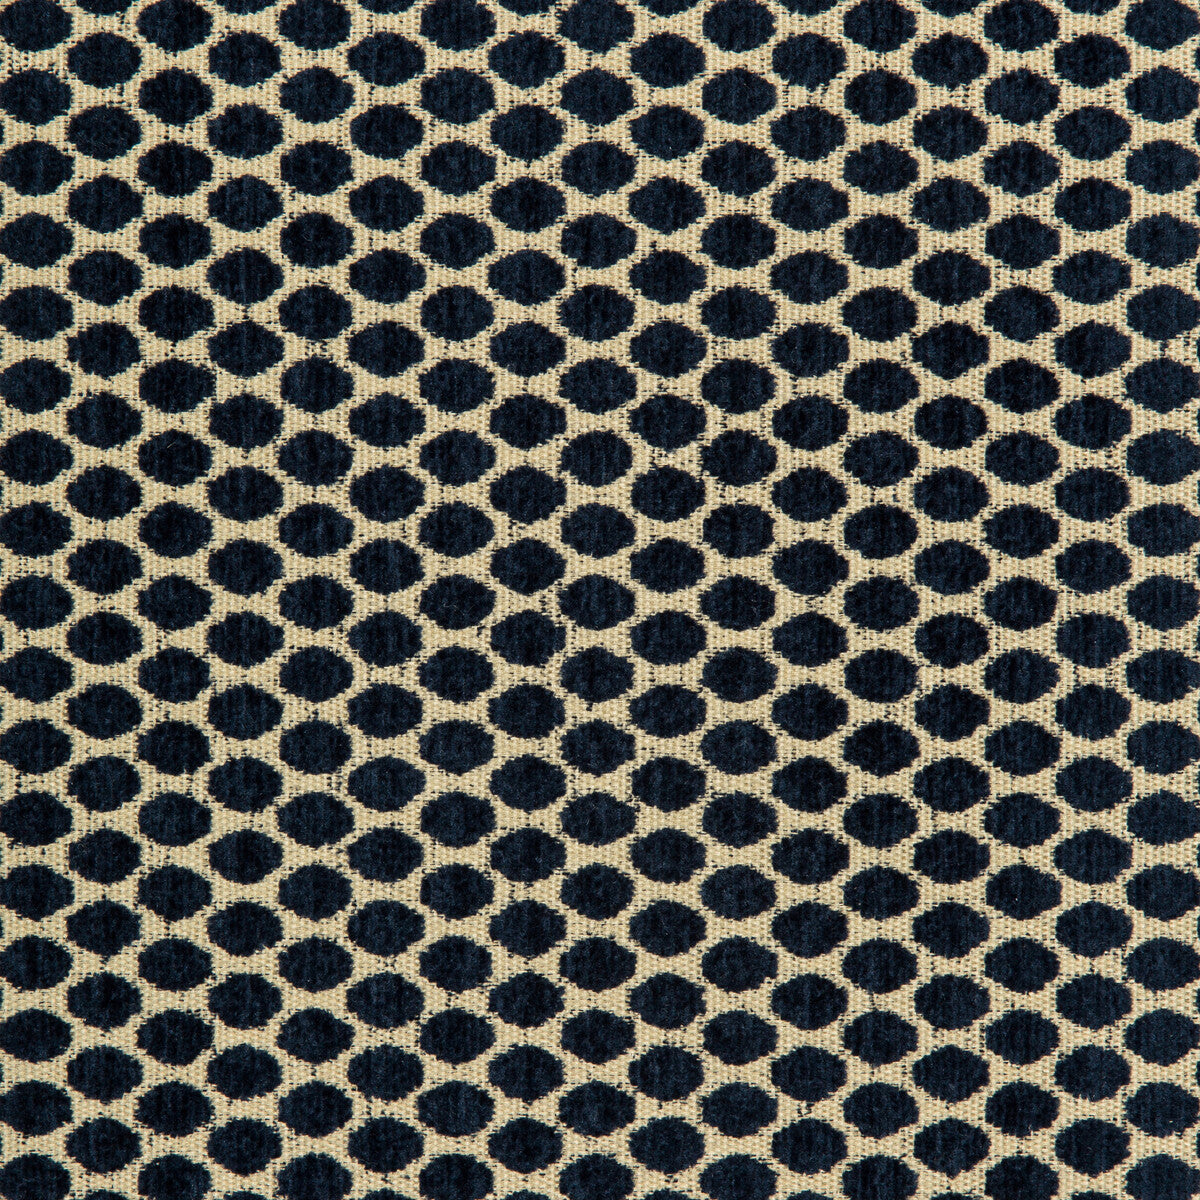 Kravet Smart fabric in 34344-50 color - pattern 34344.50.0 - by Kravet Smart